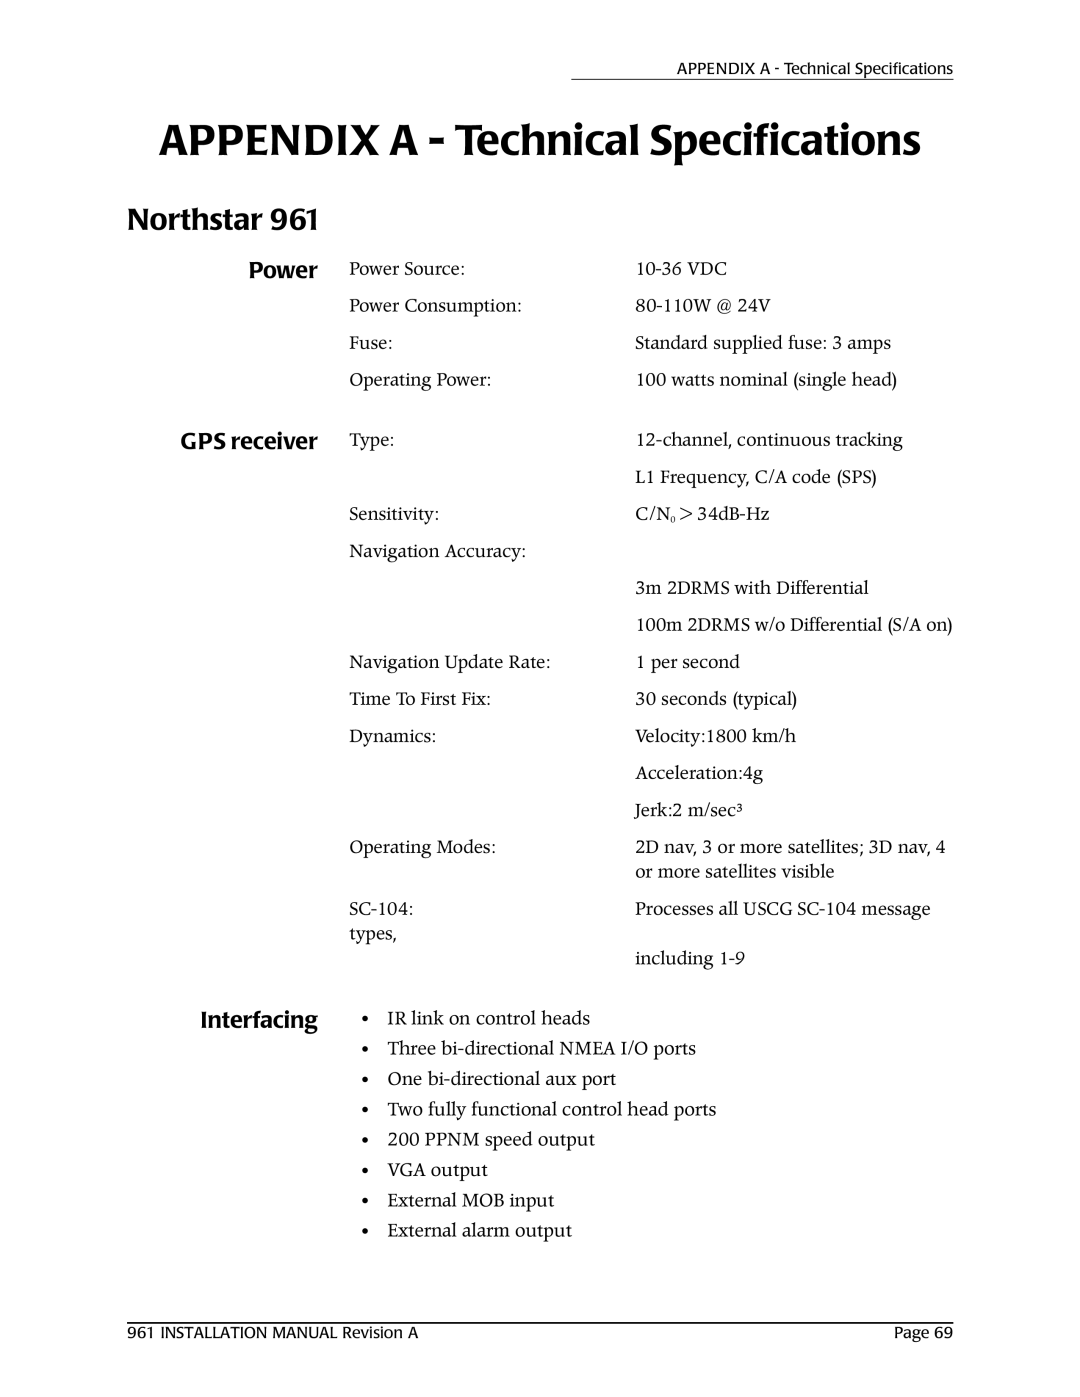 NorthStar Navigation 961XD installation manual Northstar, Power GPS receiver, Interfacing 